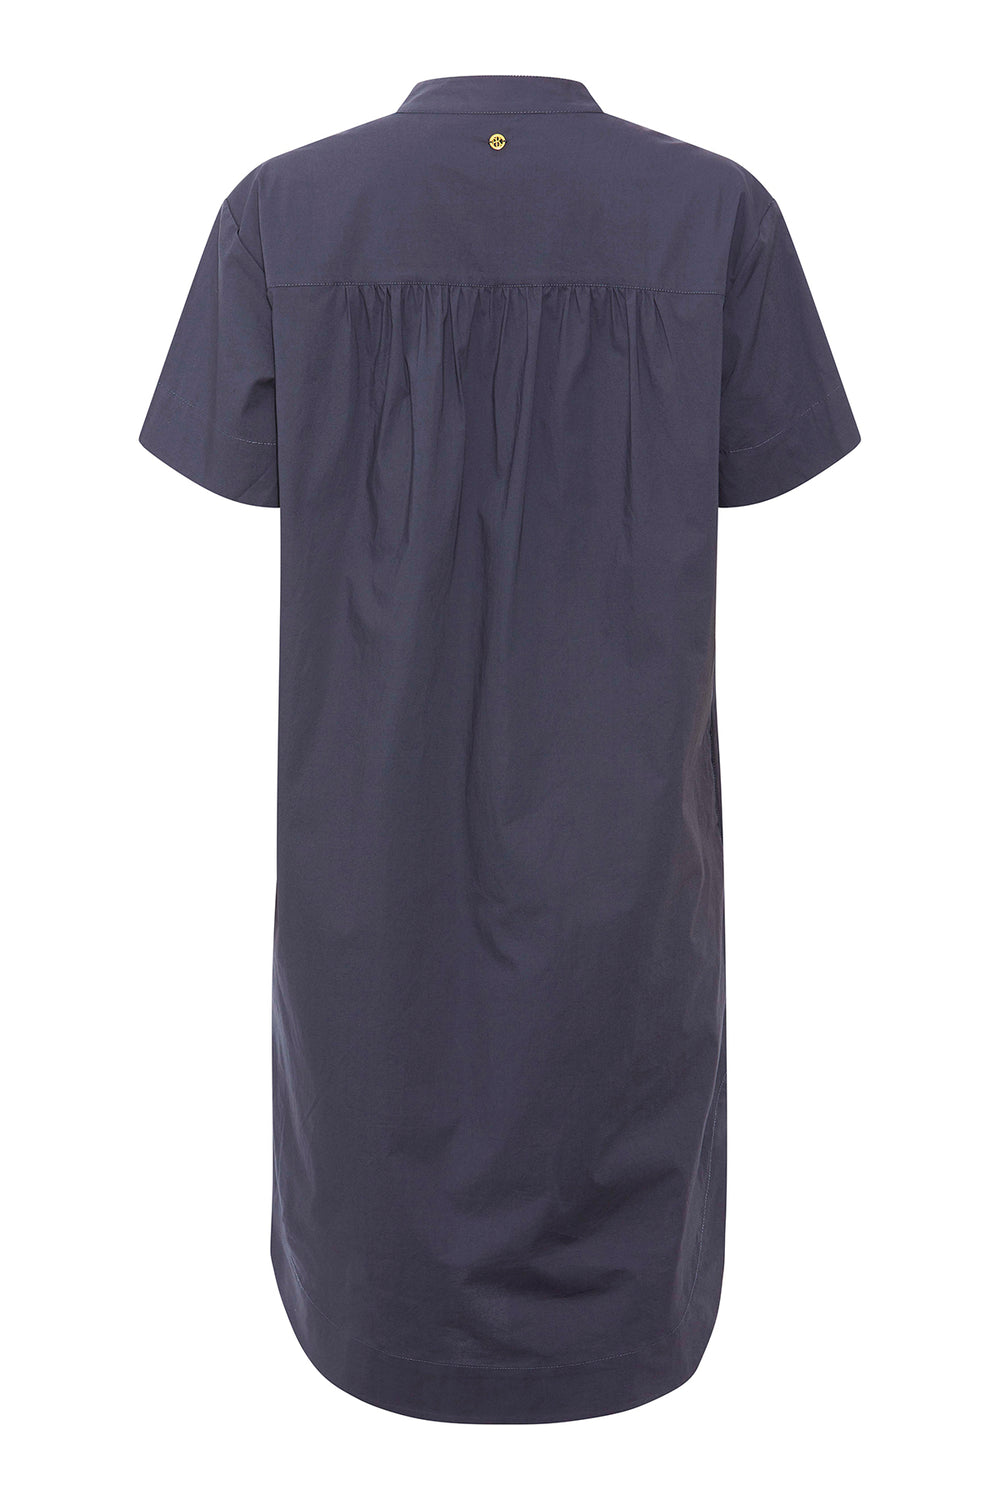 PBO Mahalo kjole DRESSES 214 Ombre blue